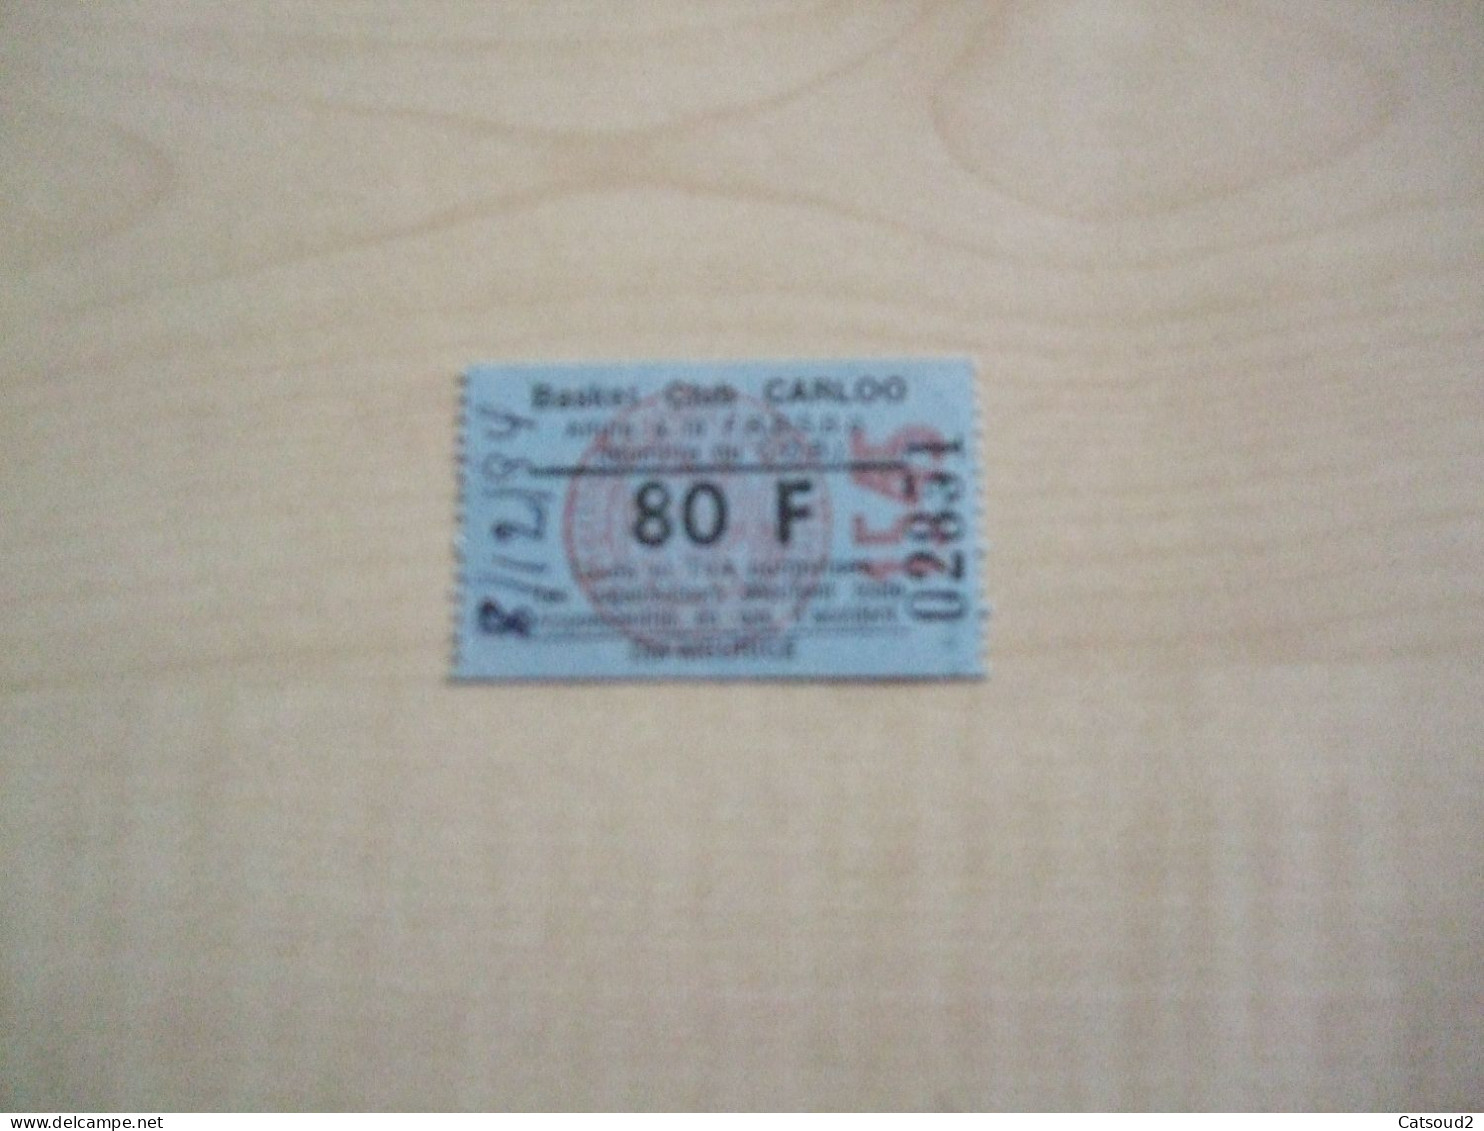 Ancien Ticket BASKET CLUB CARLOO - Tickets - Vouchers